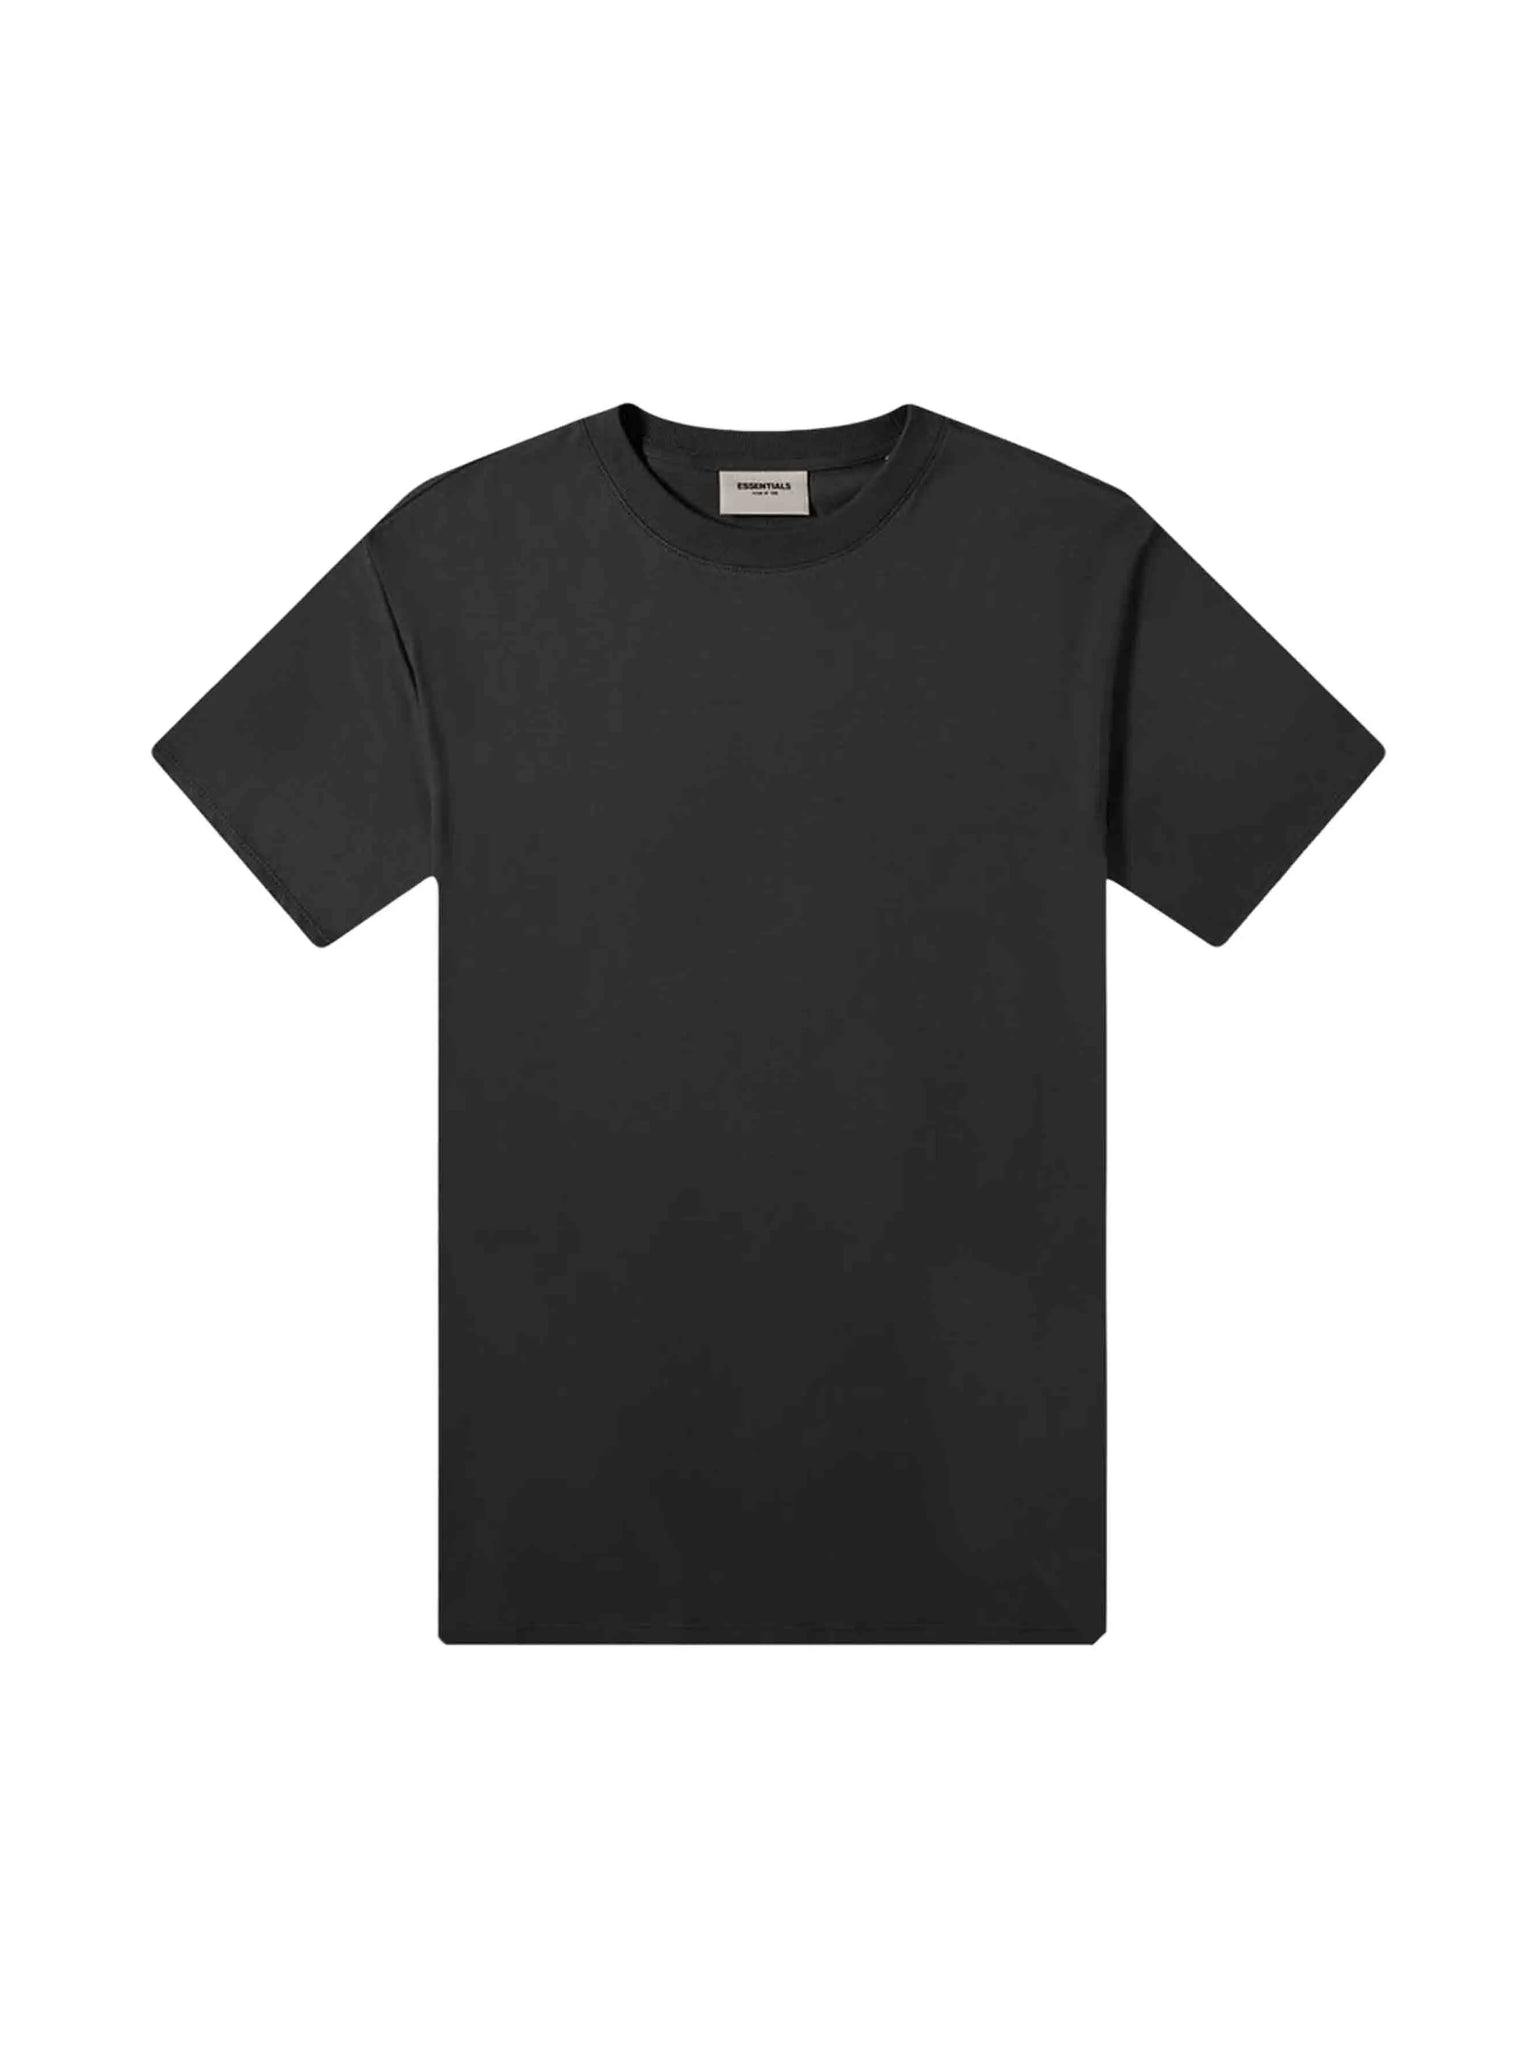 Fear of God Essentials T-shirt Black/Stretch Limo - Prior